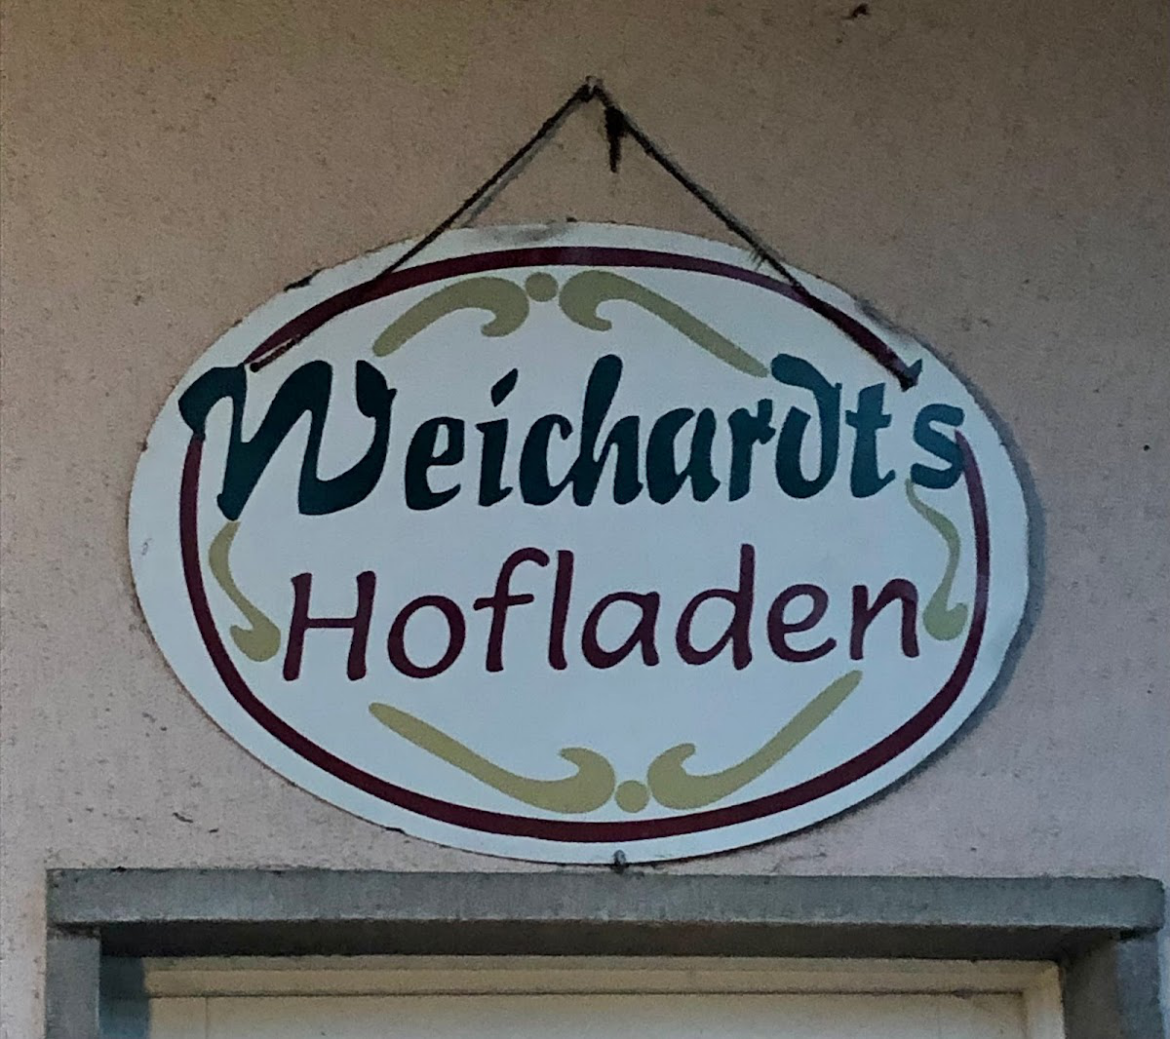  Weichardt’s Hofladen